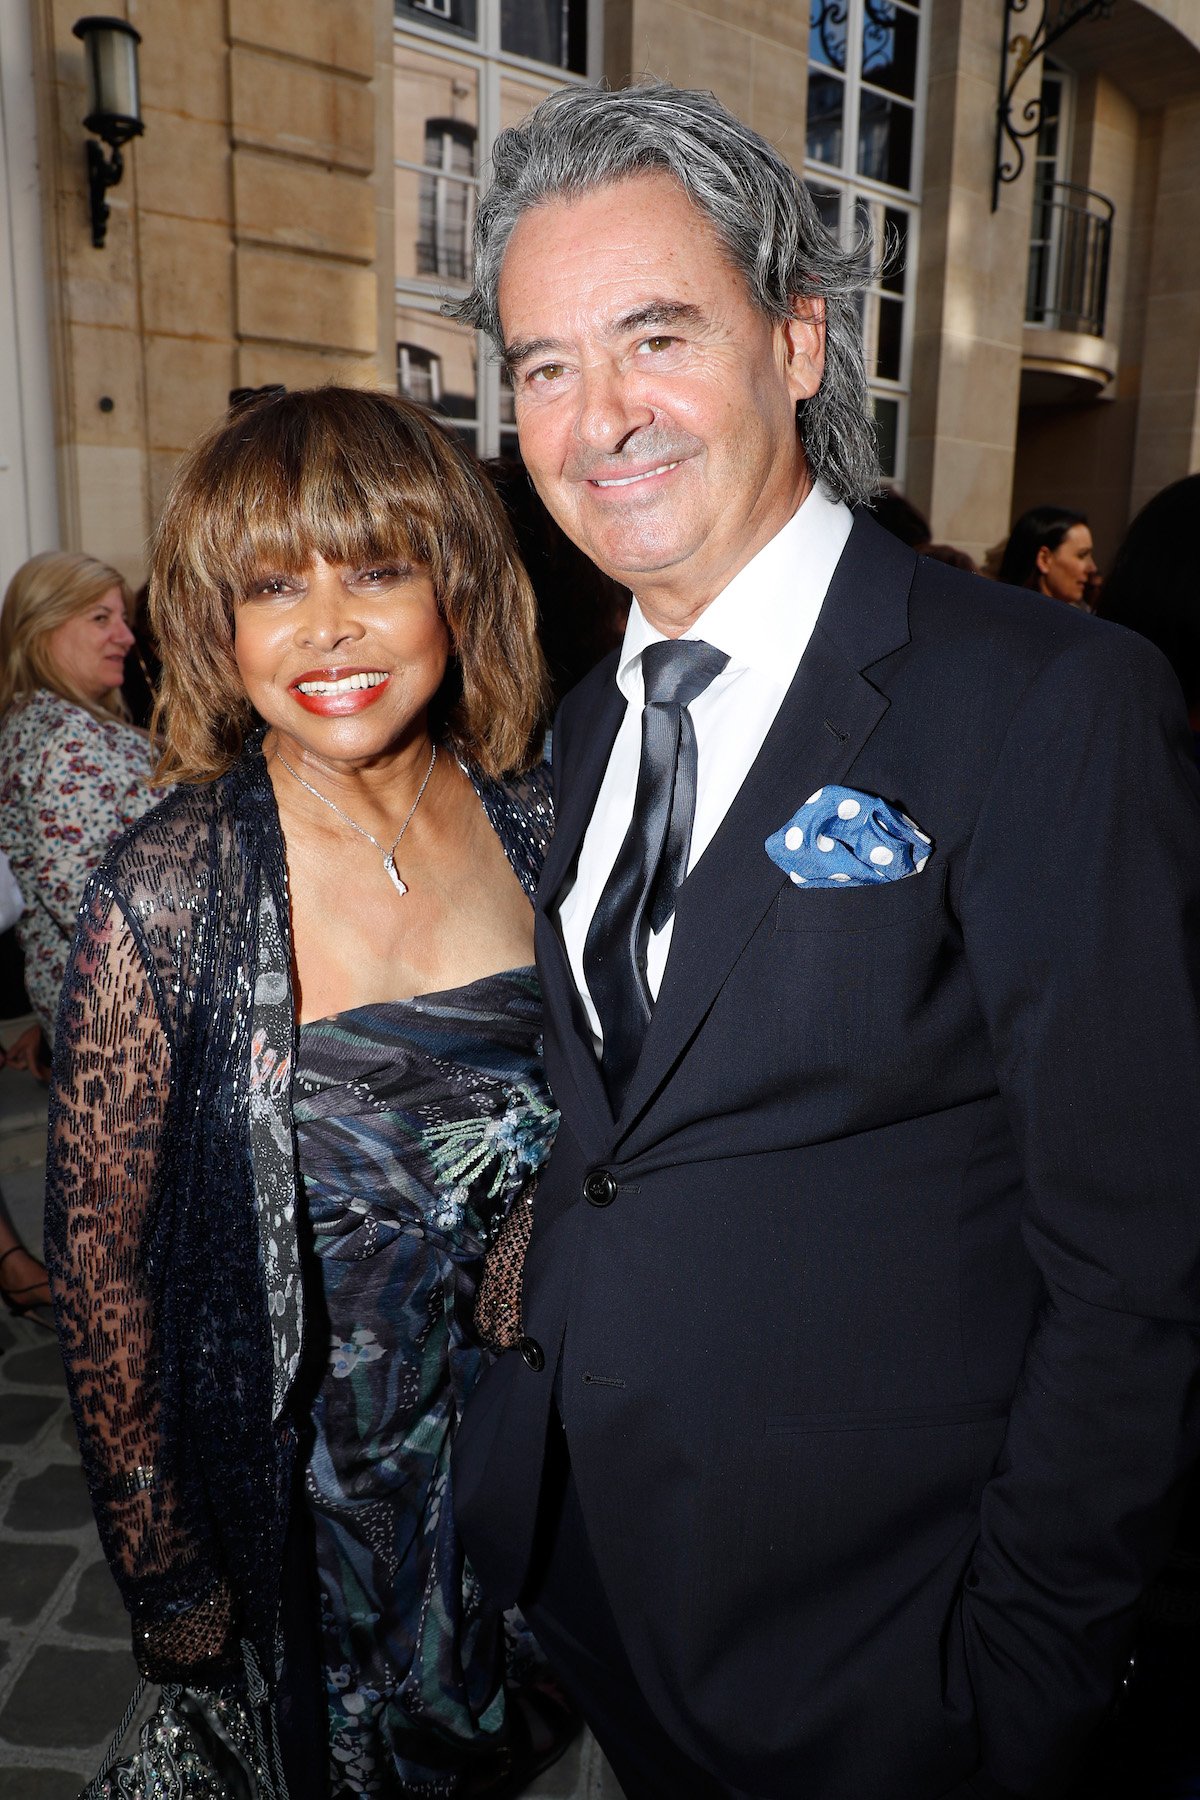 Tina Turner and Erwin Bach